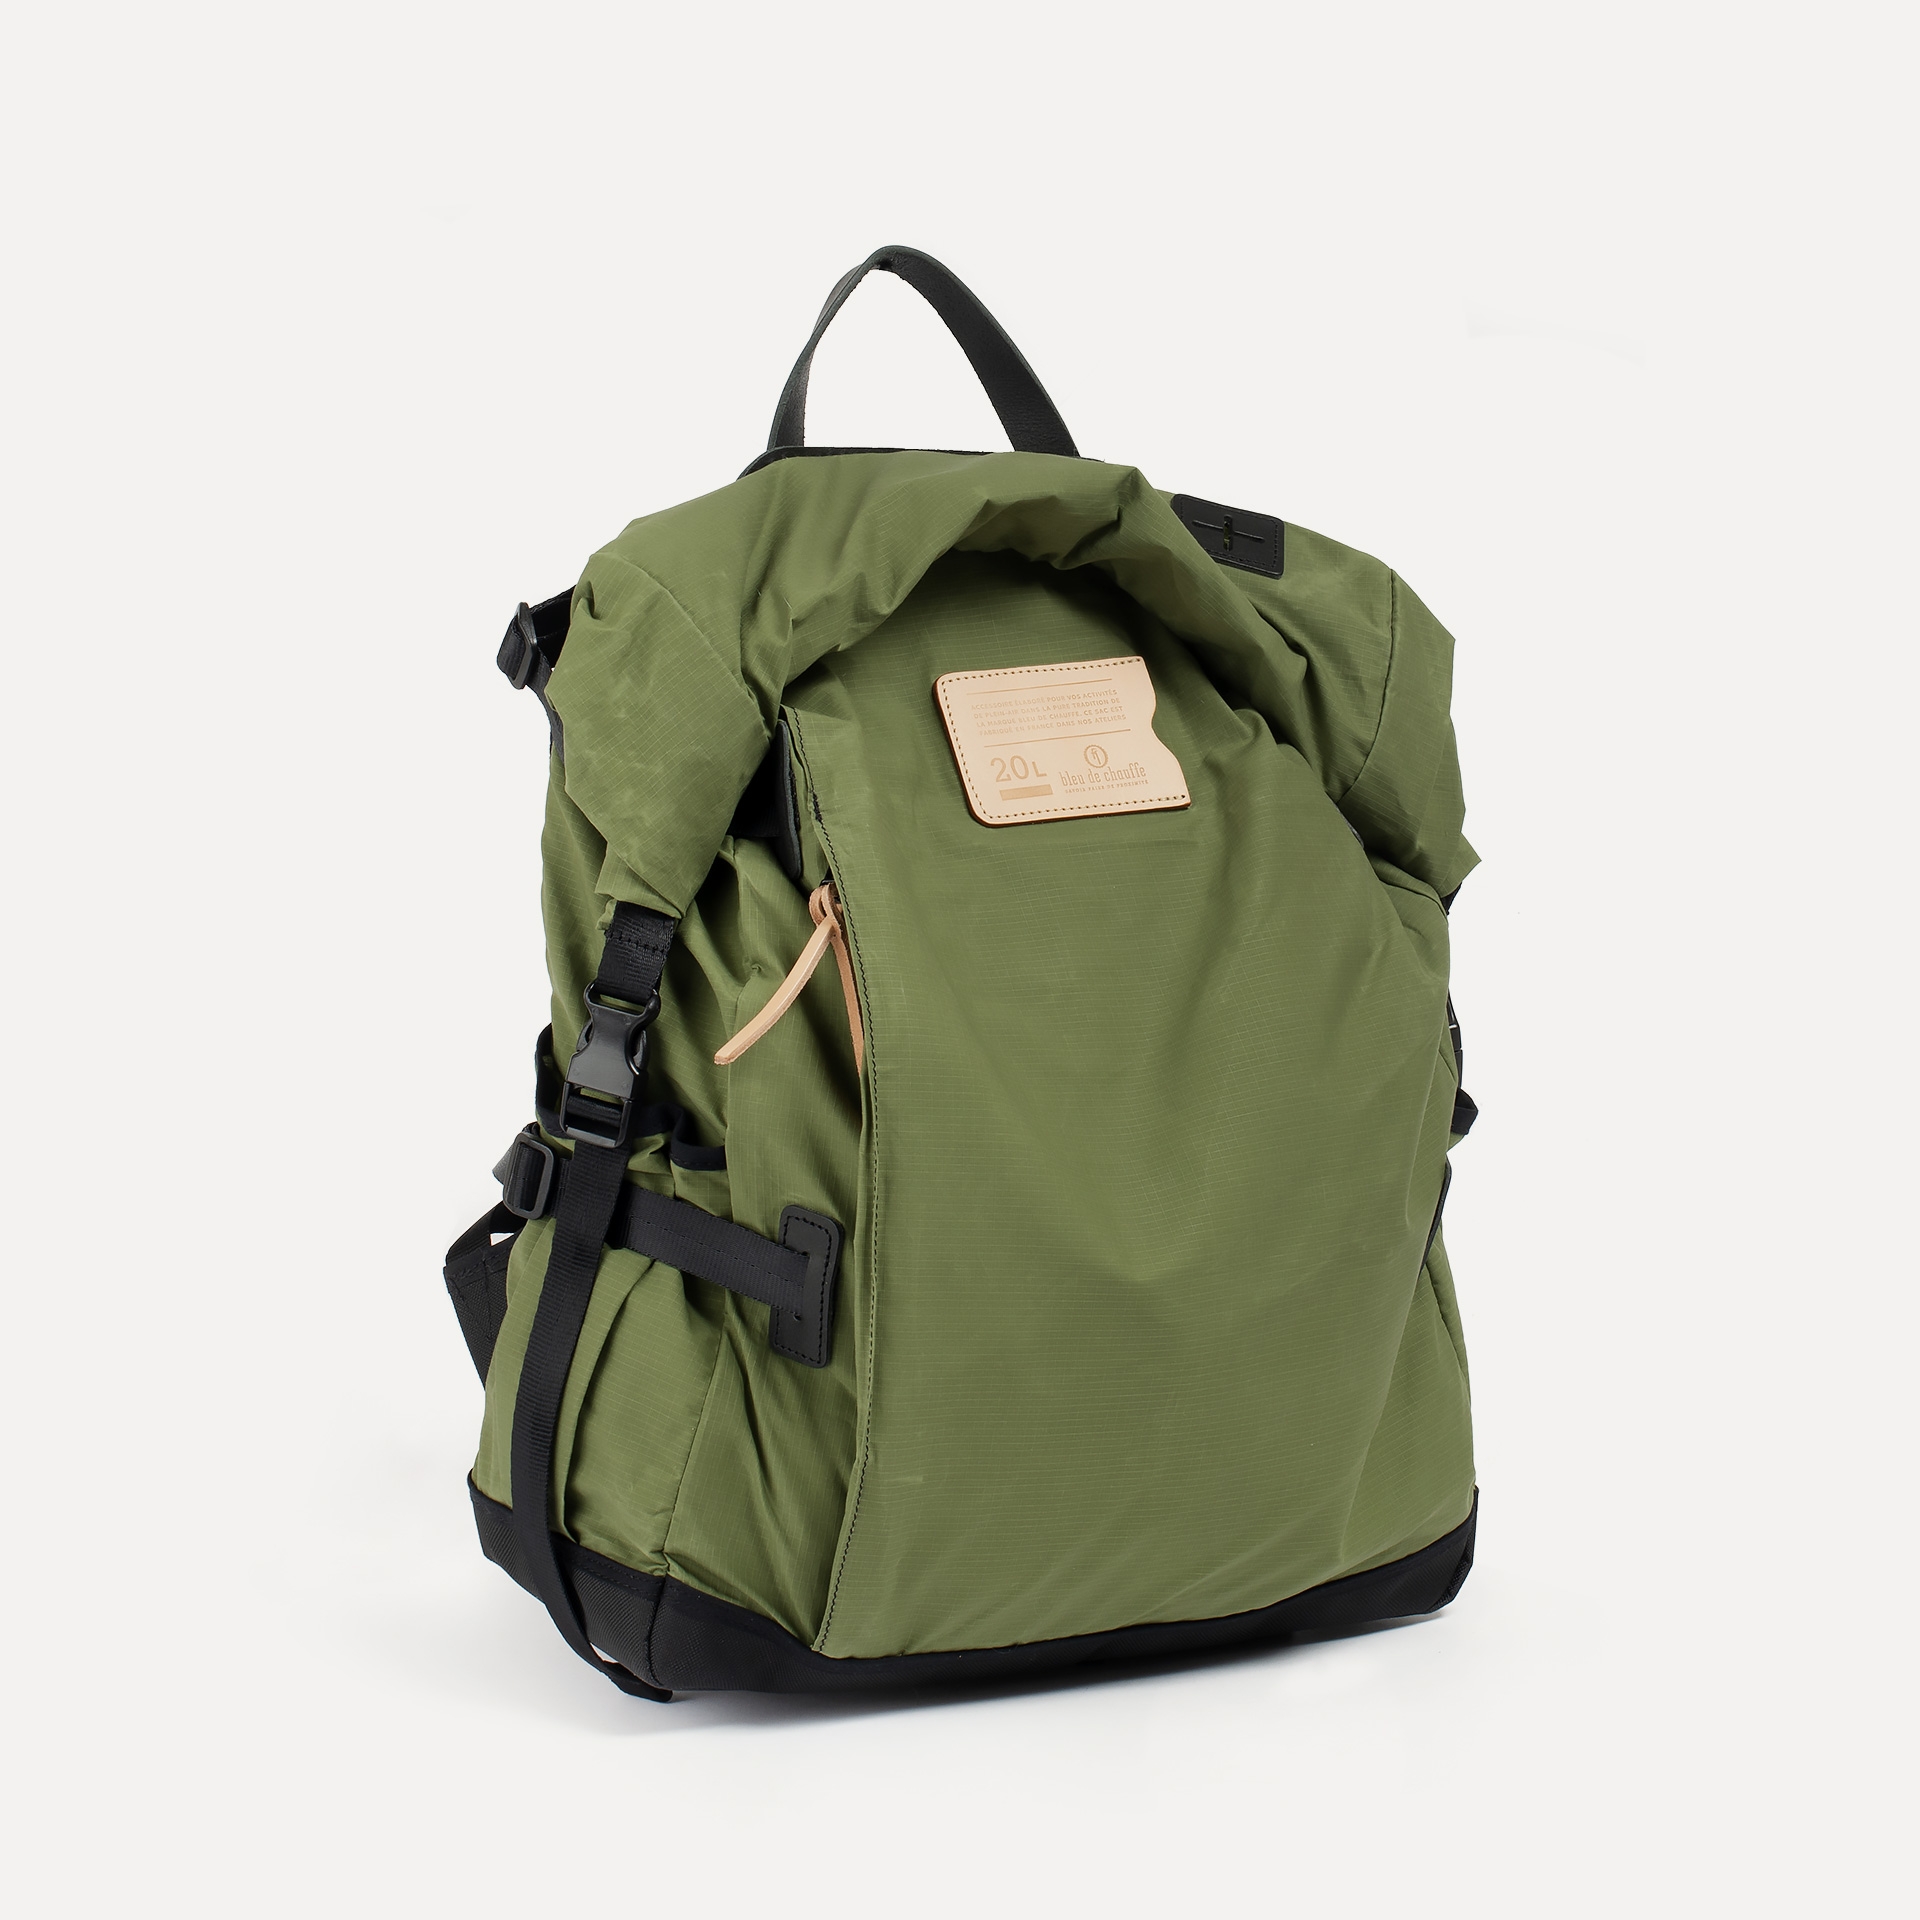 20L Basile Backpack - Bancha Green (image n°1)